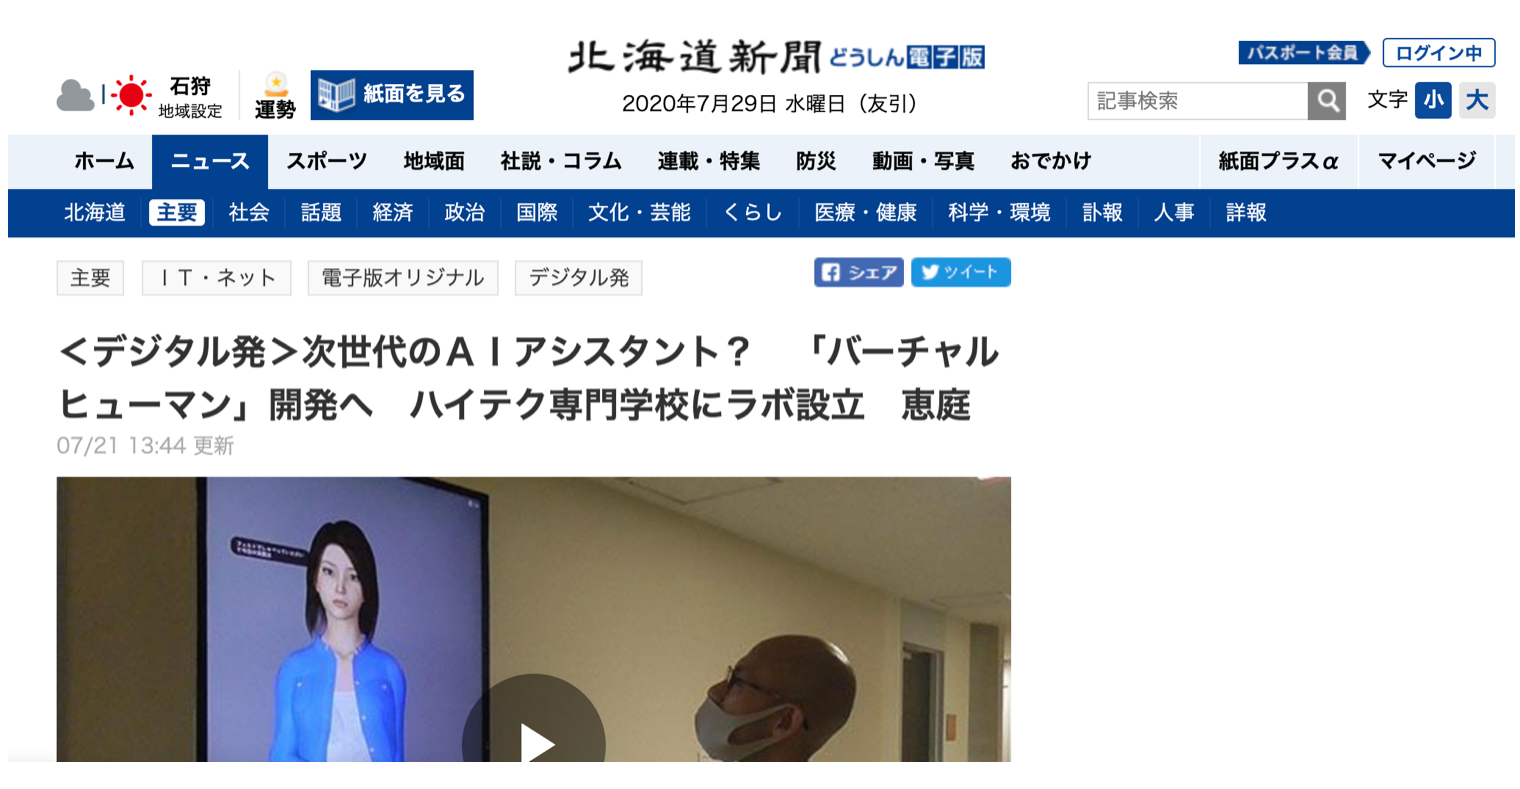 The "Virtual Human Lab" established at Hokkaido College of High Technology was featured in the Hokkaido Shimbun